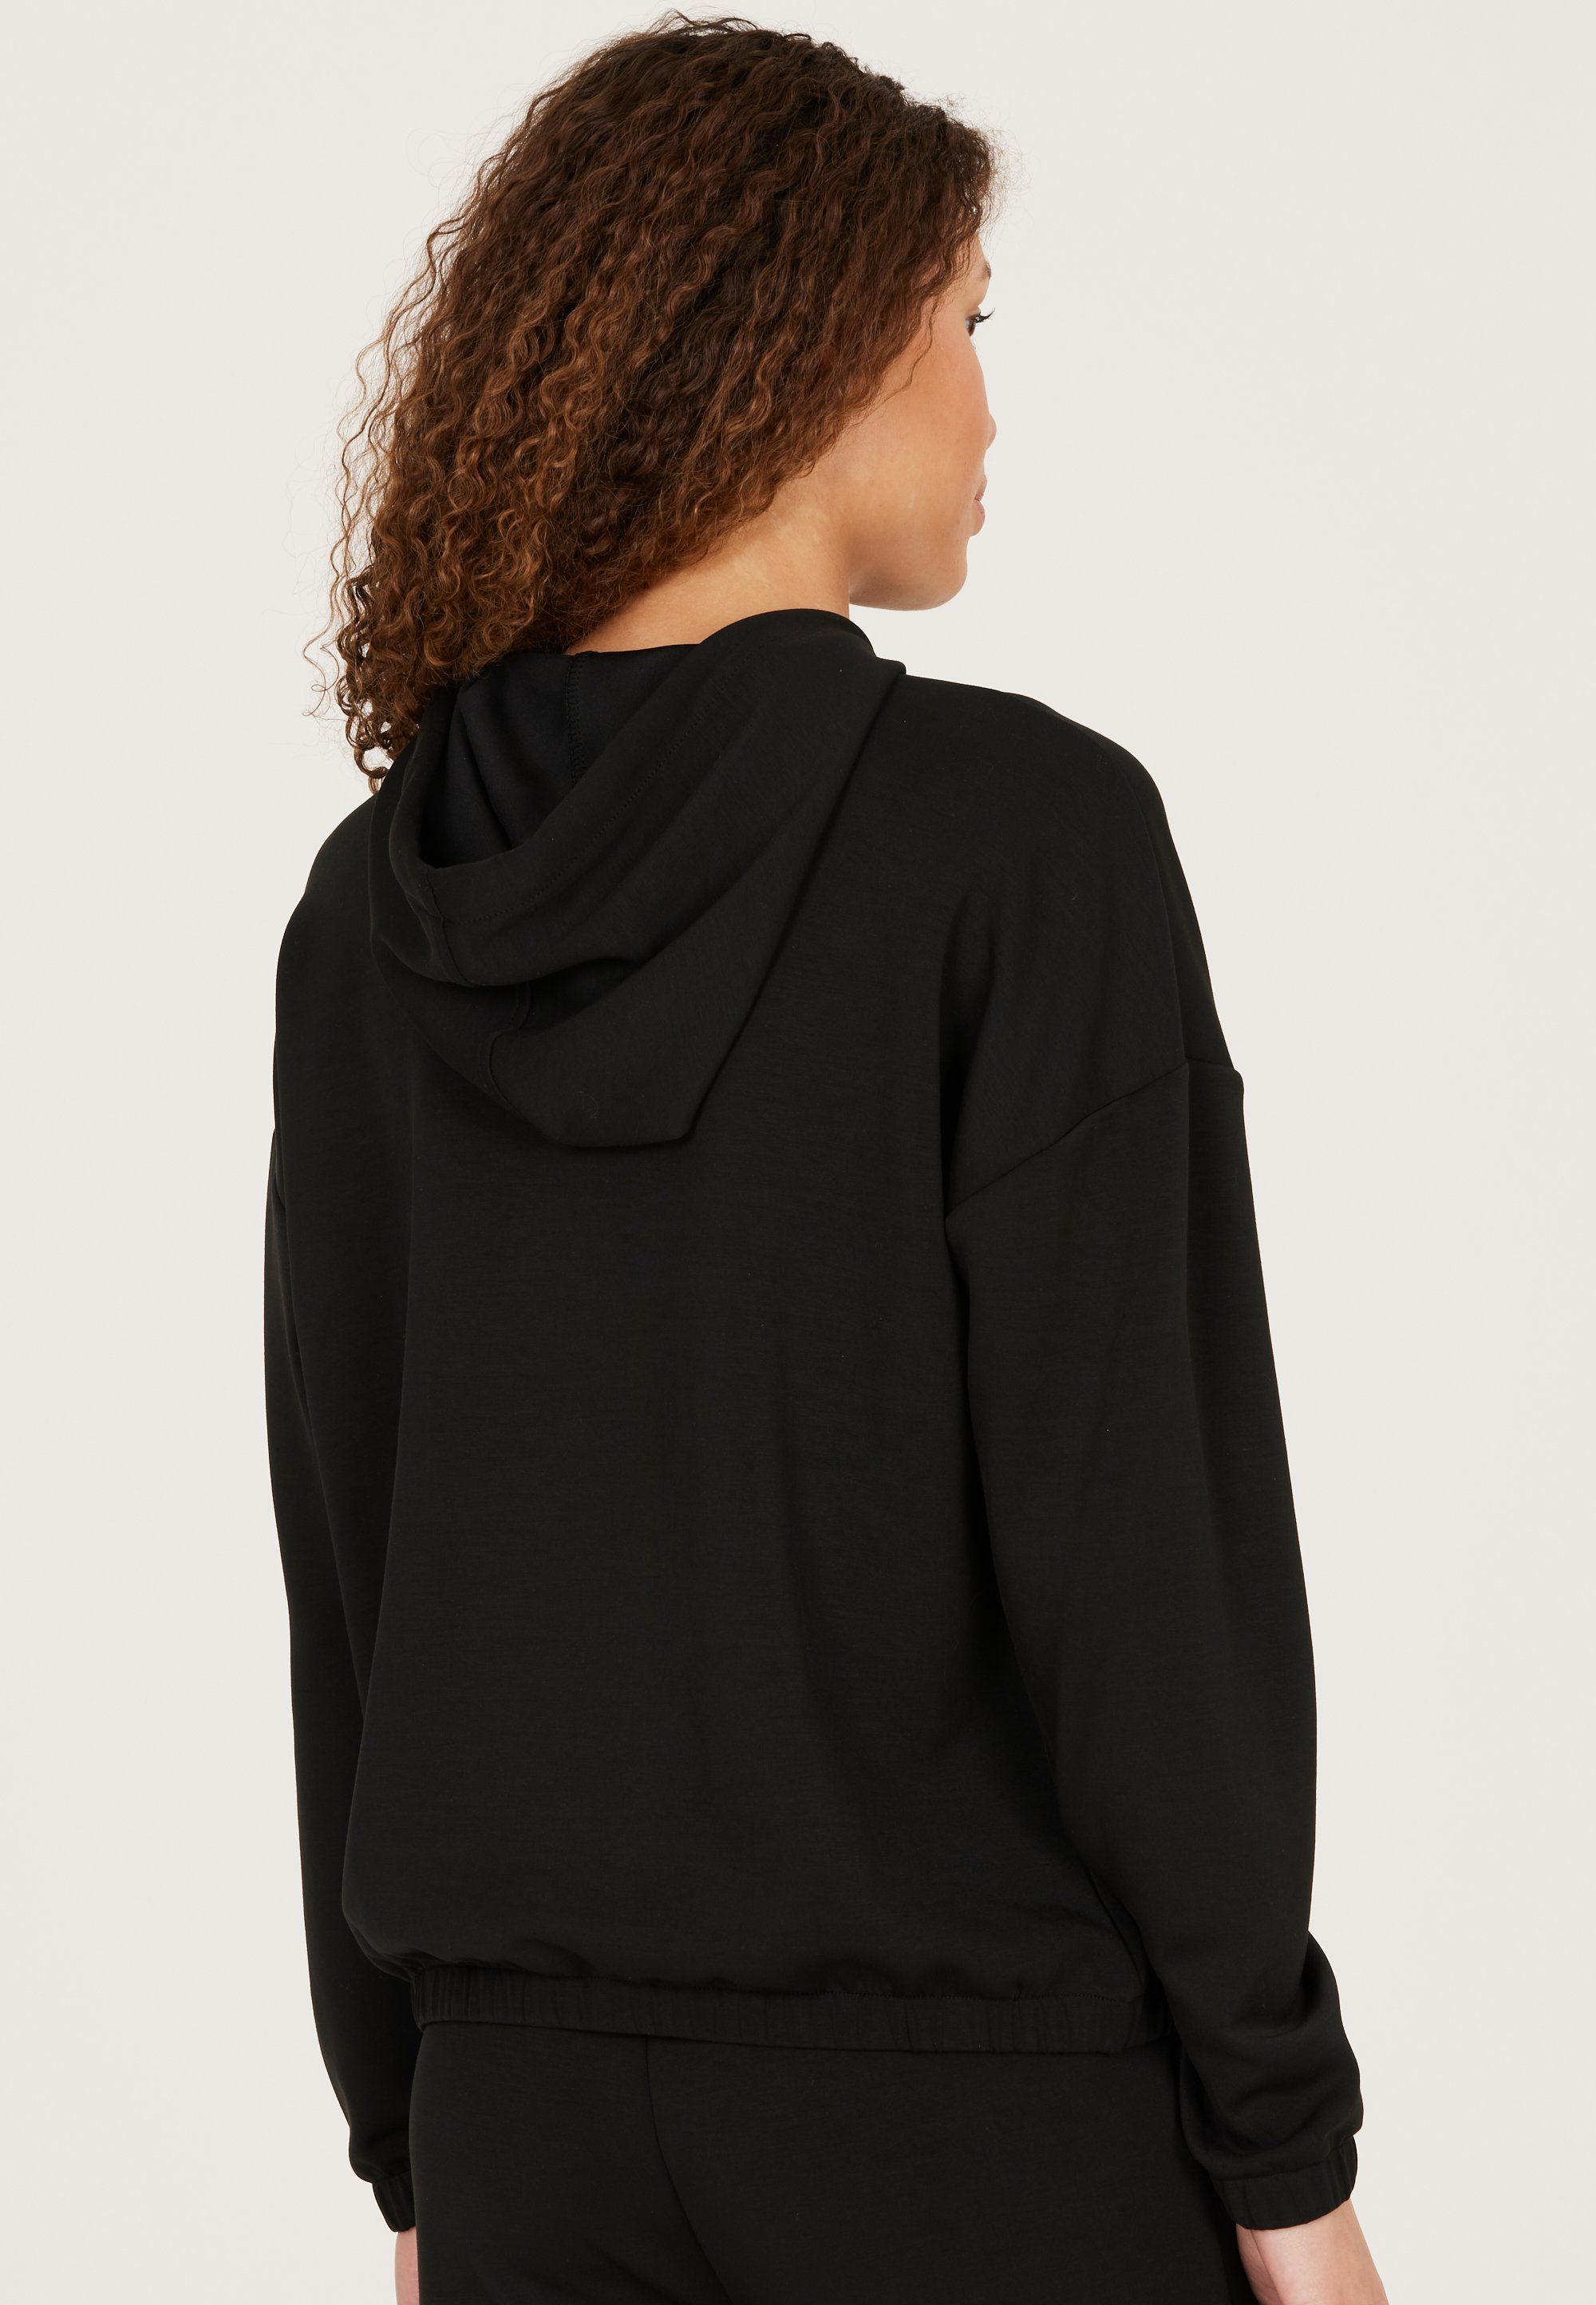 ATHLECIA Kapuzensweatshirt NAMIER W mit hohem Modal-Anteil schwarz